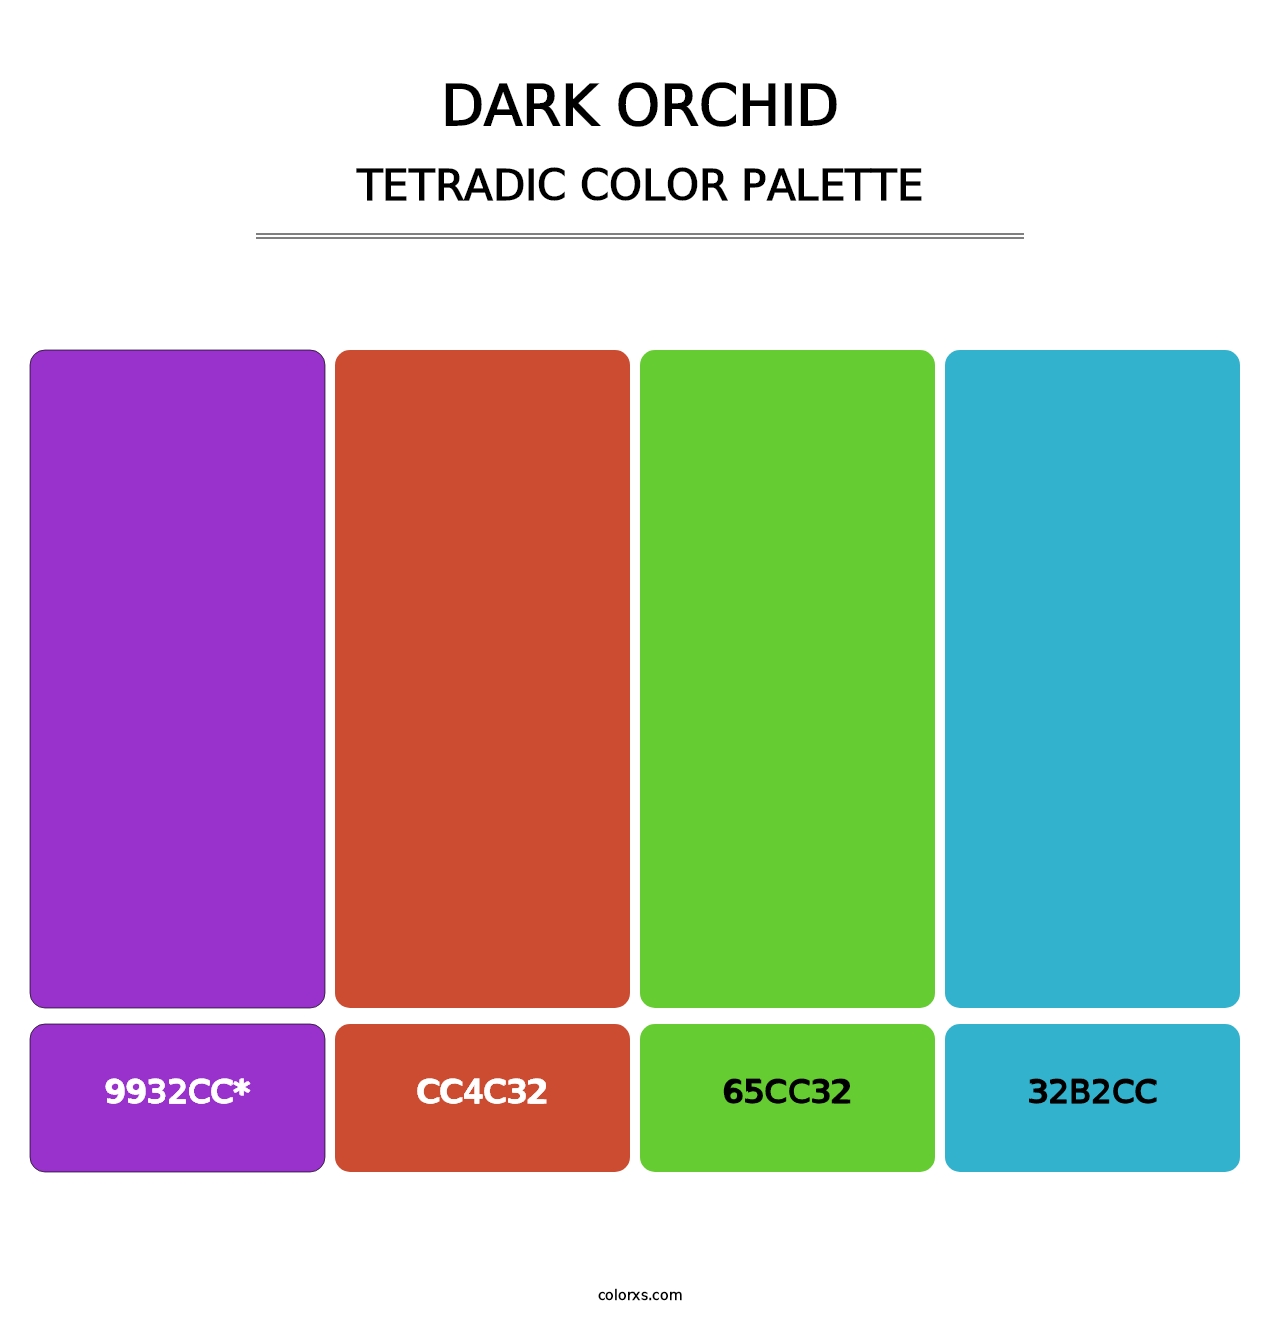 Dark Orchid - Tetradic Color Palette